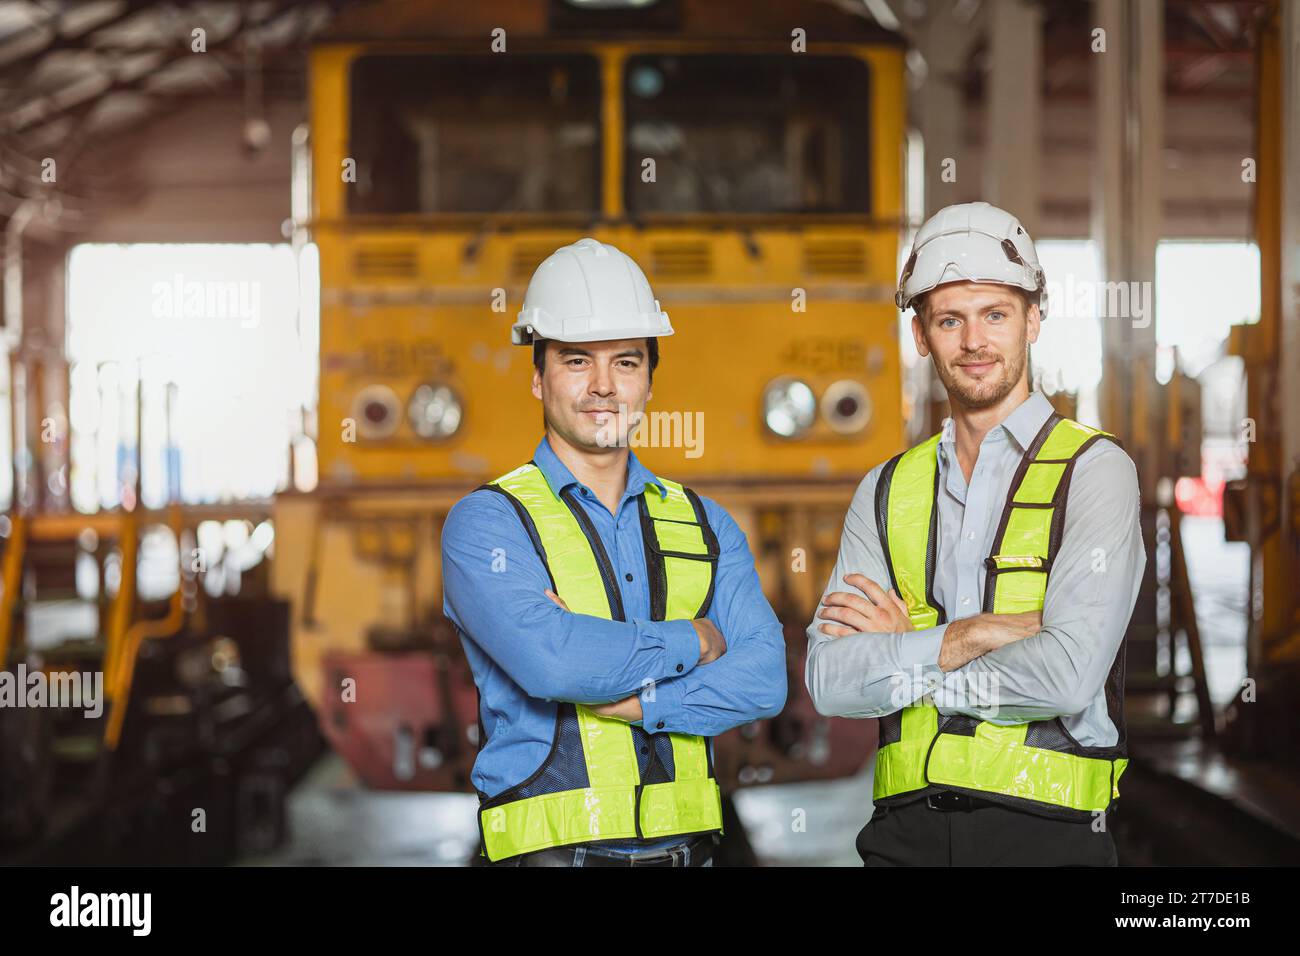 Portrait engineer two men standing in locomotive train depot friend technician team worker smart condident employee. Stock Photo